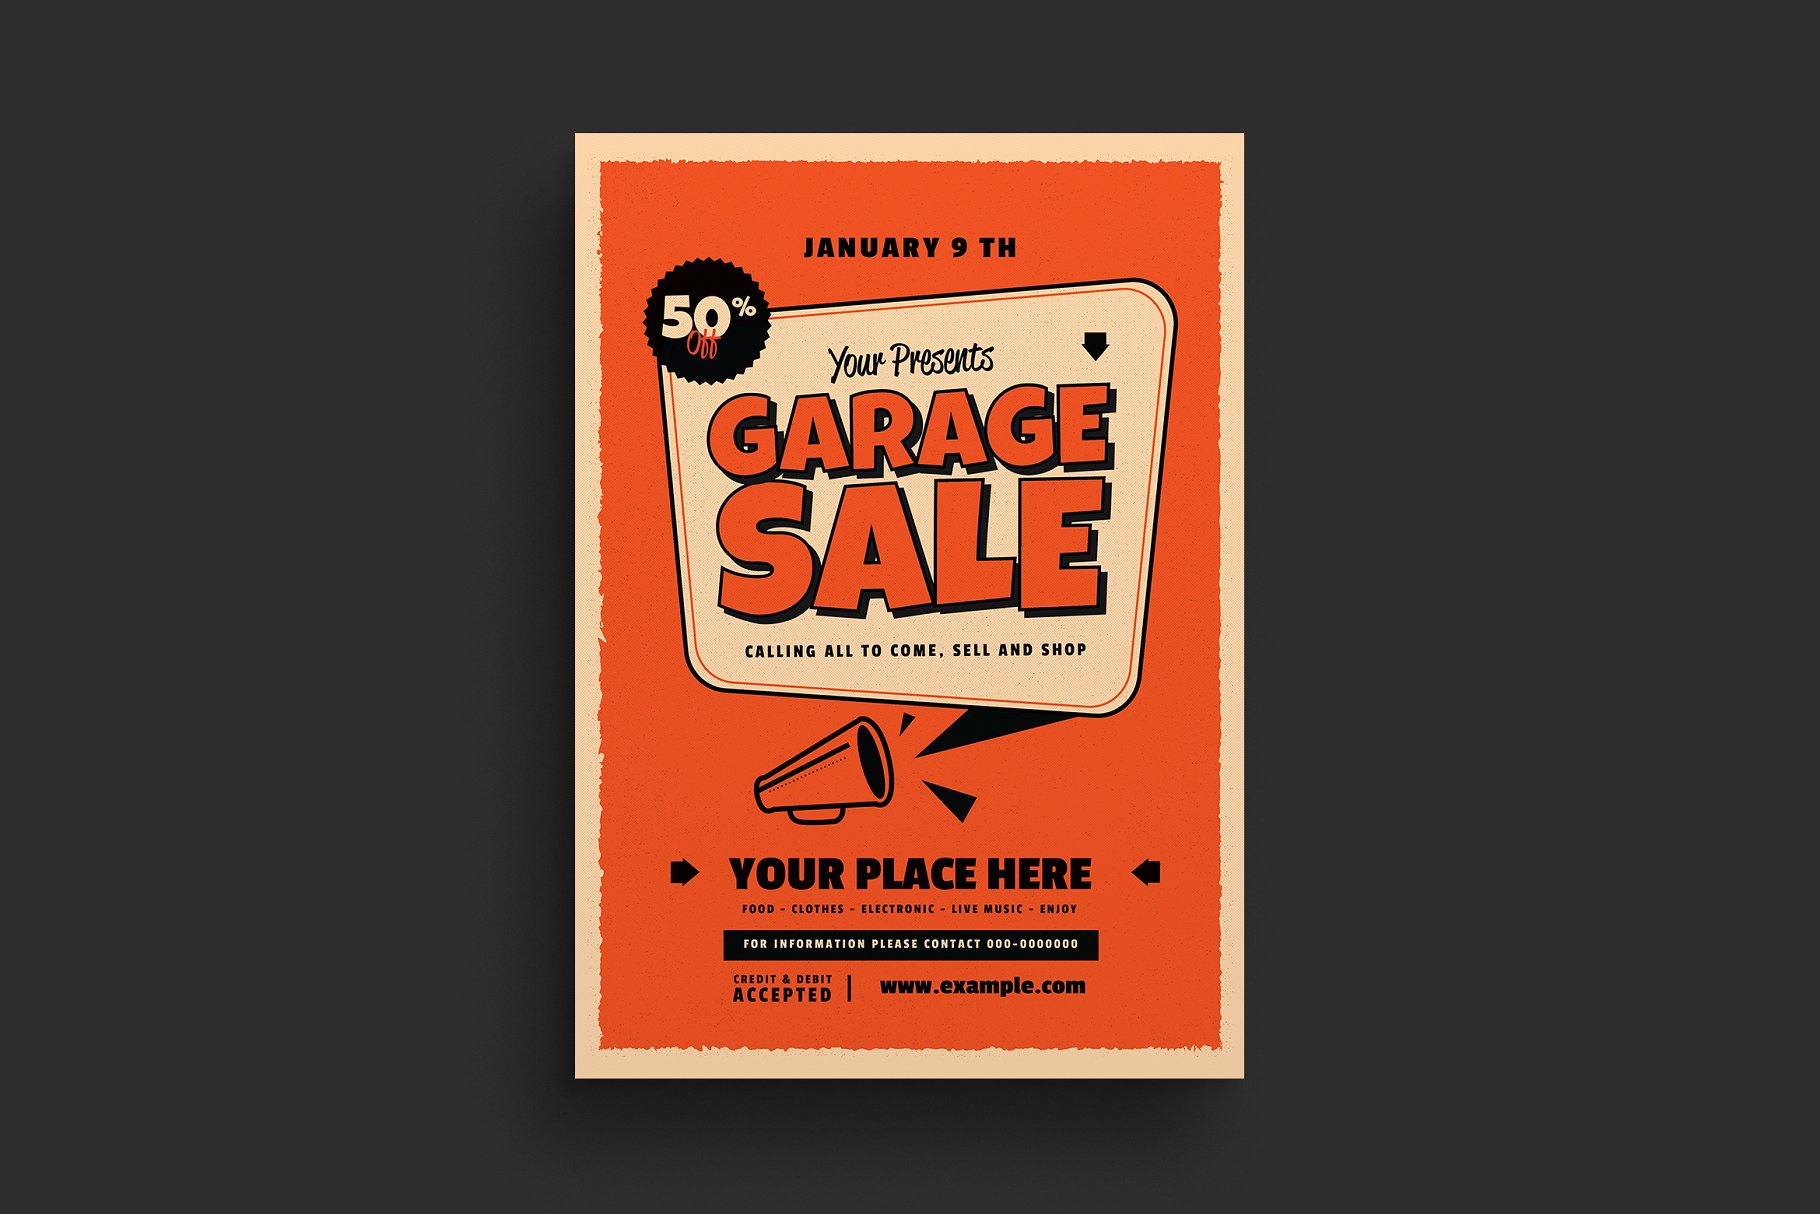 复古汽车销售活动促销广告模板 Retro Garage Sale Event Flyer插图(1)